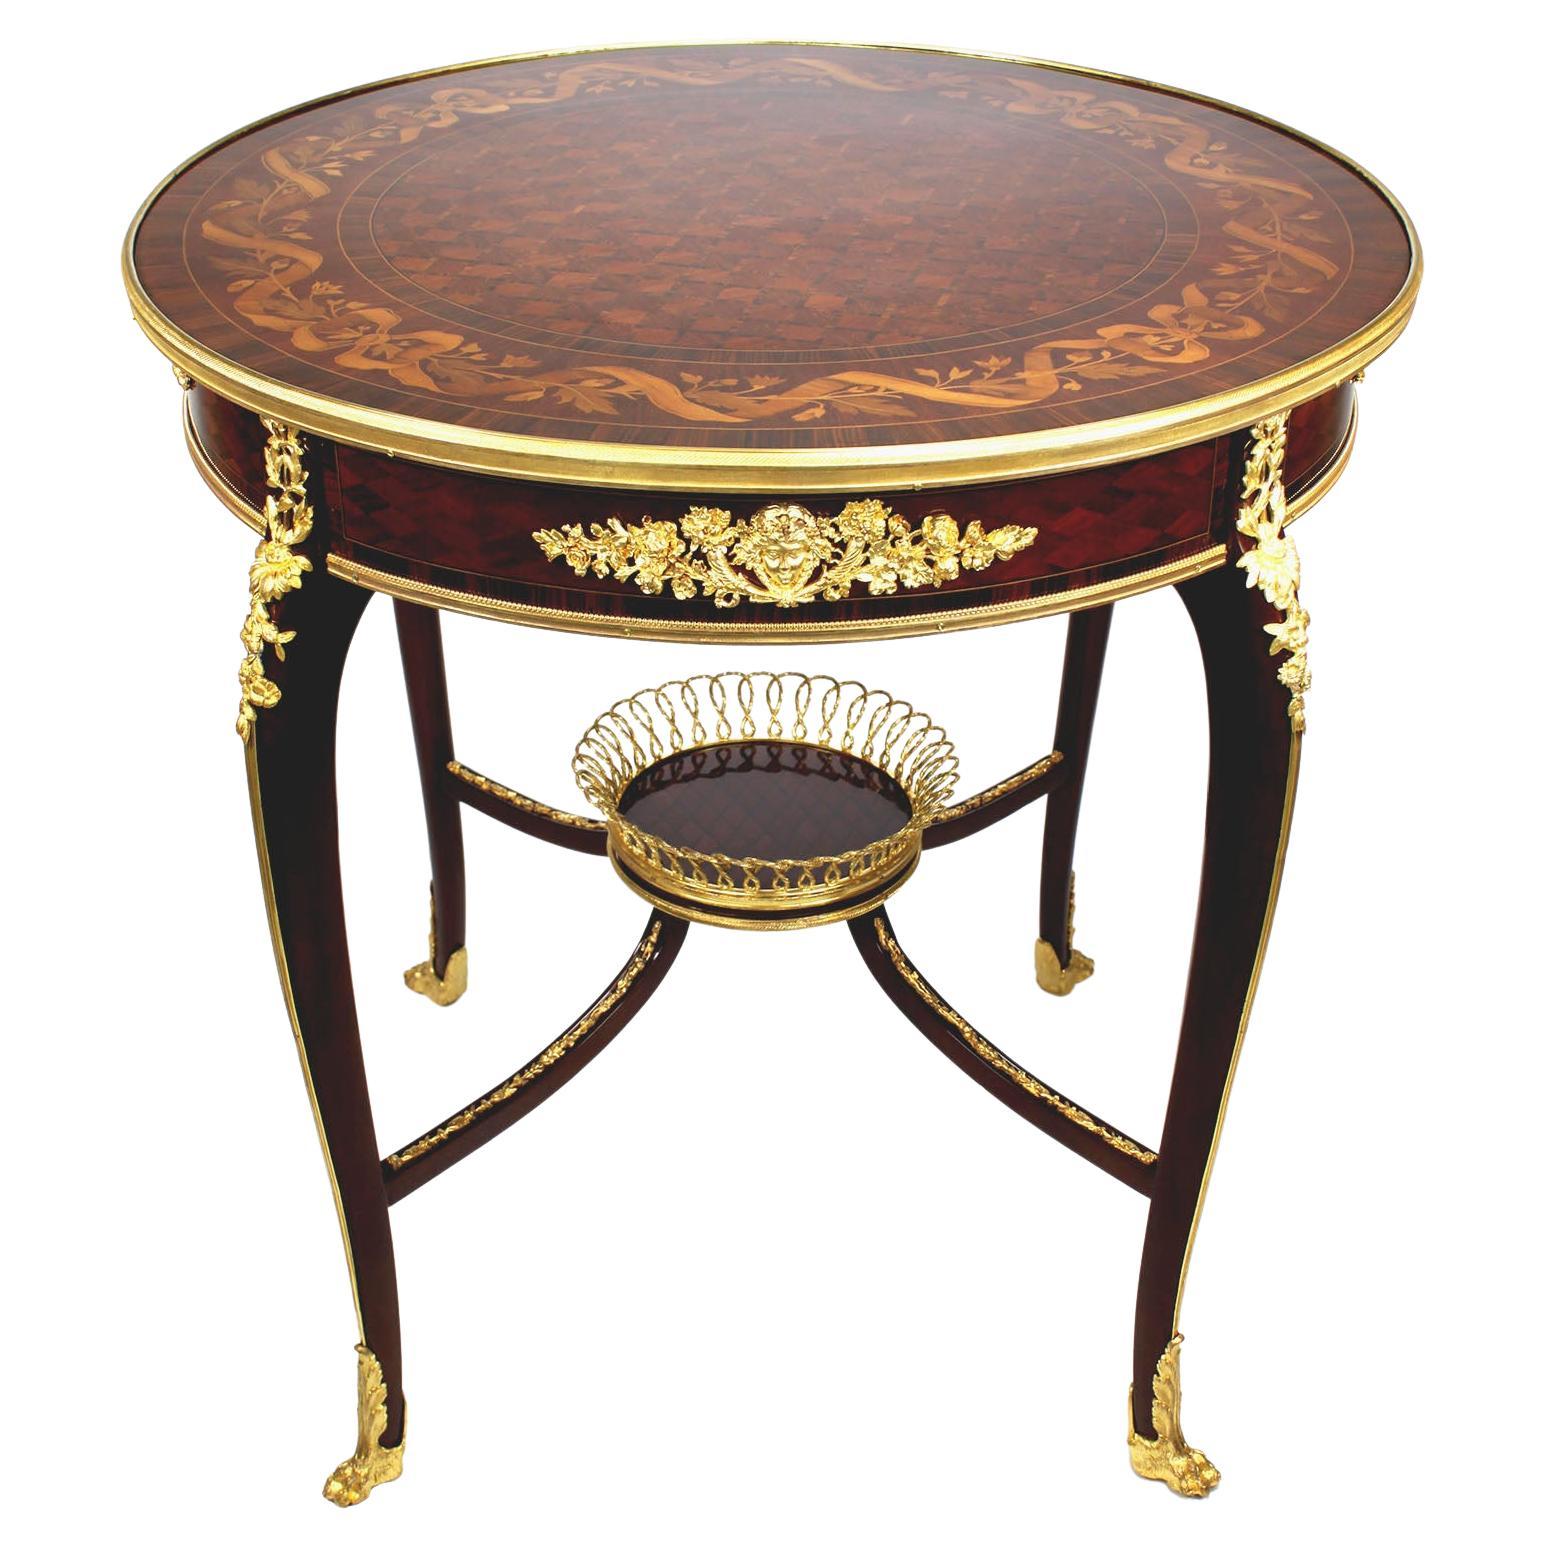 French 19th-20th Century Circular Marquetry & Ormolu Table, Attr. François Linke For Sale